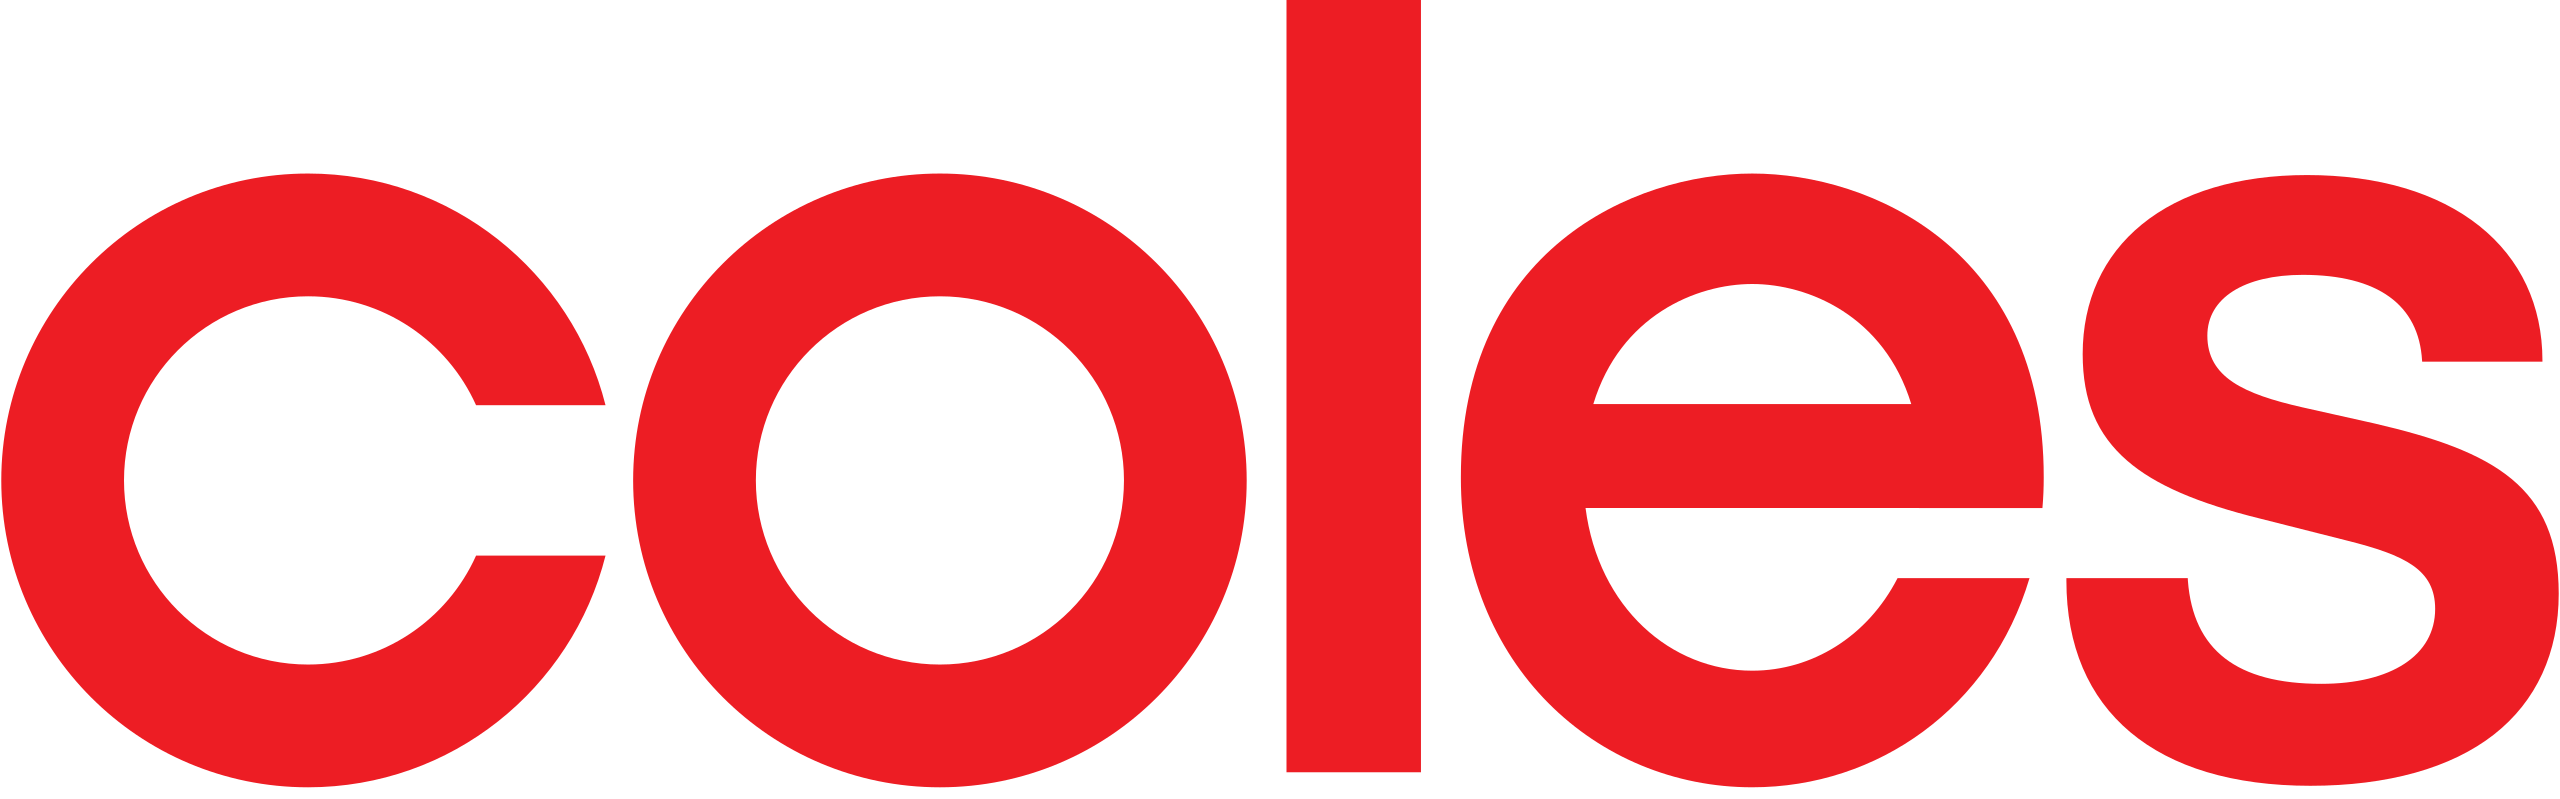 Coles_logo